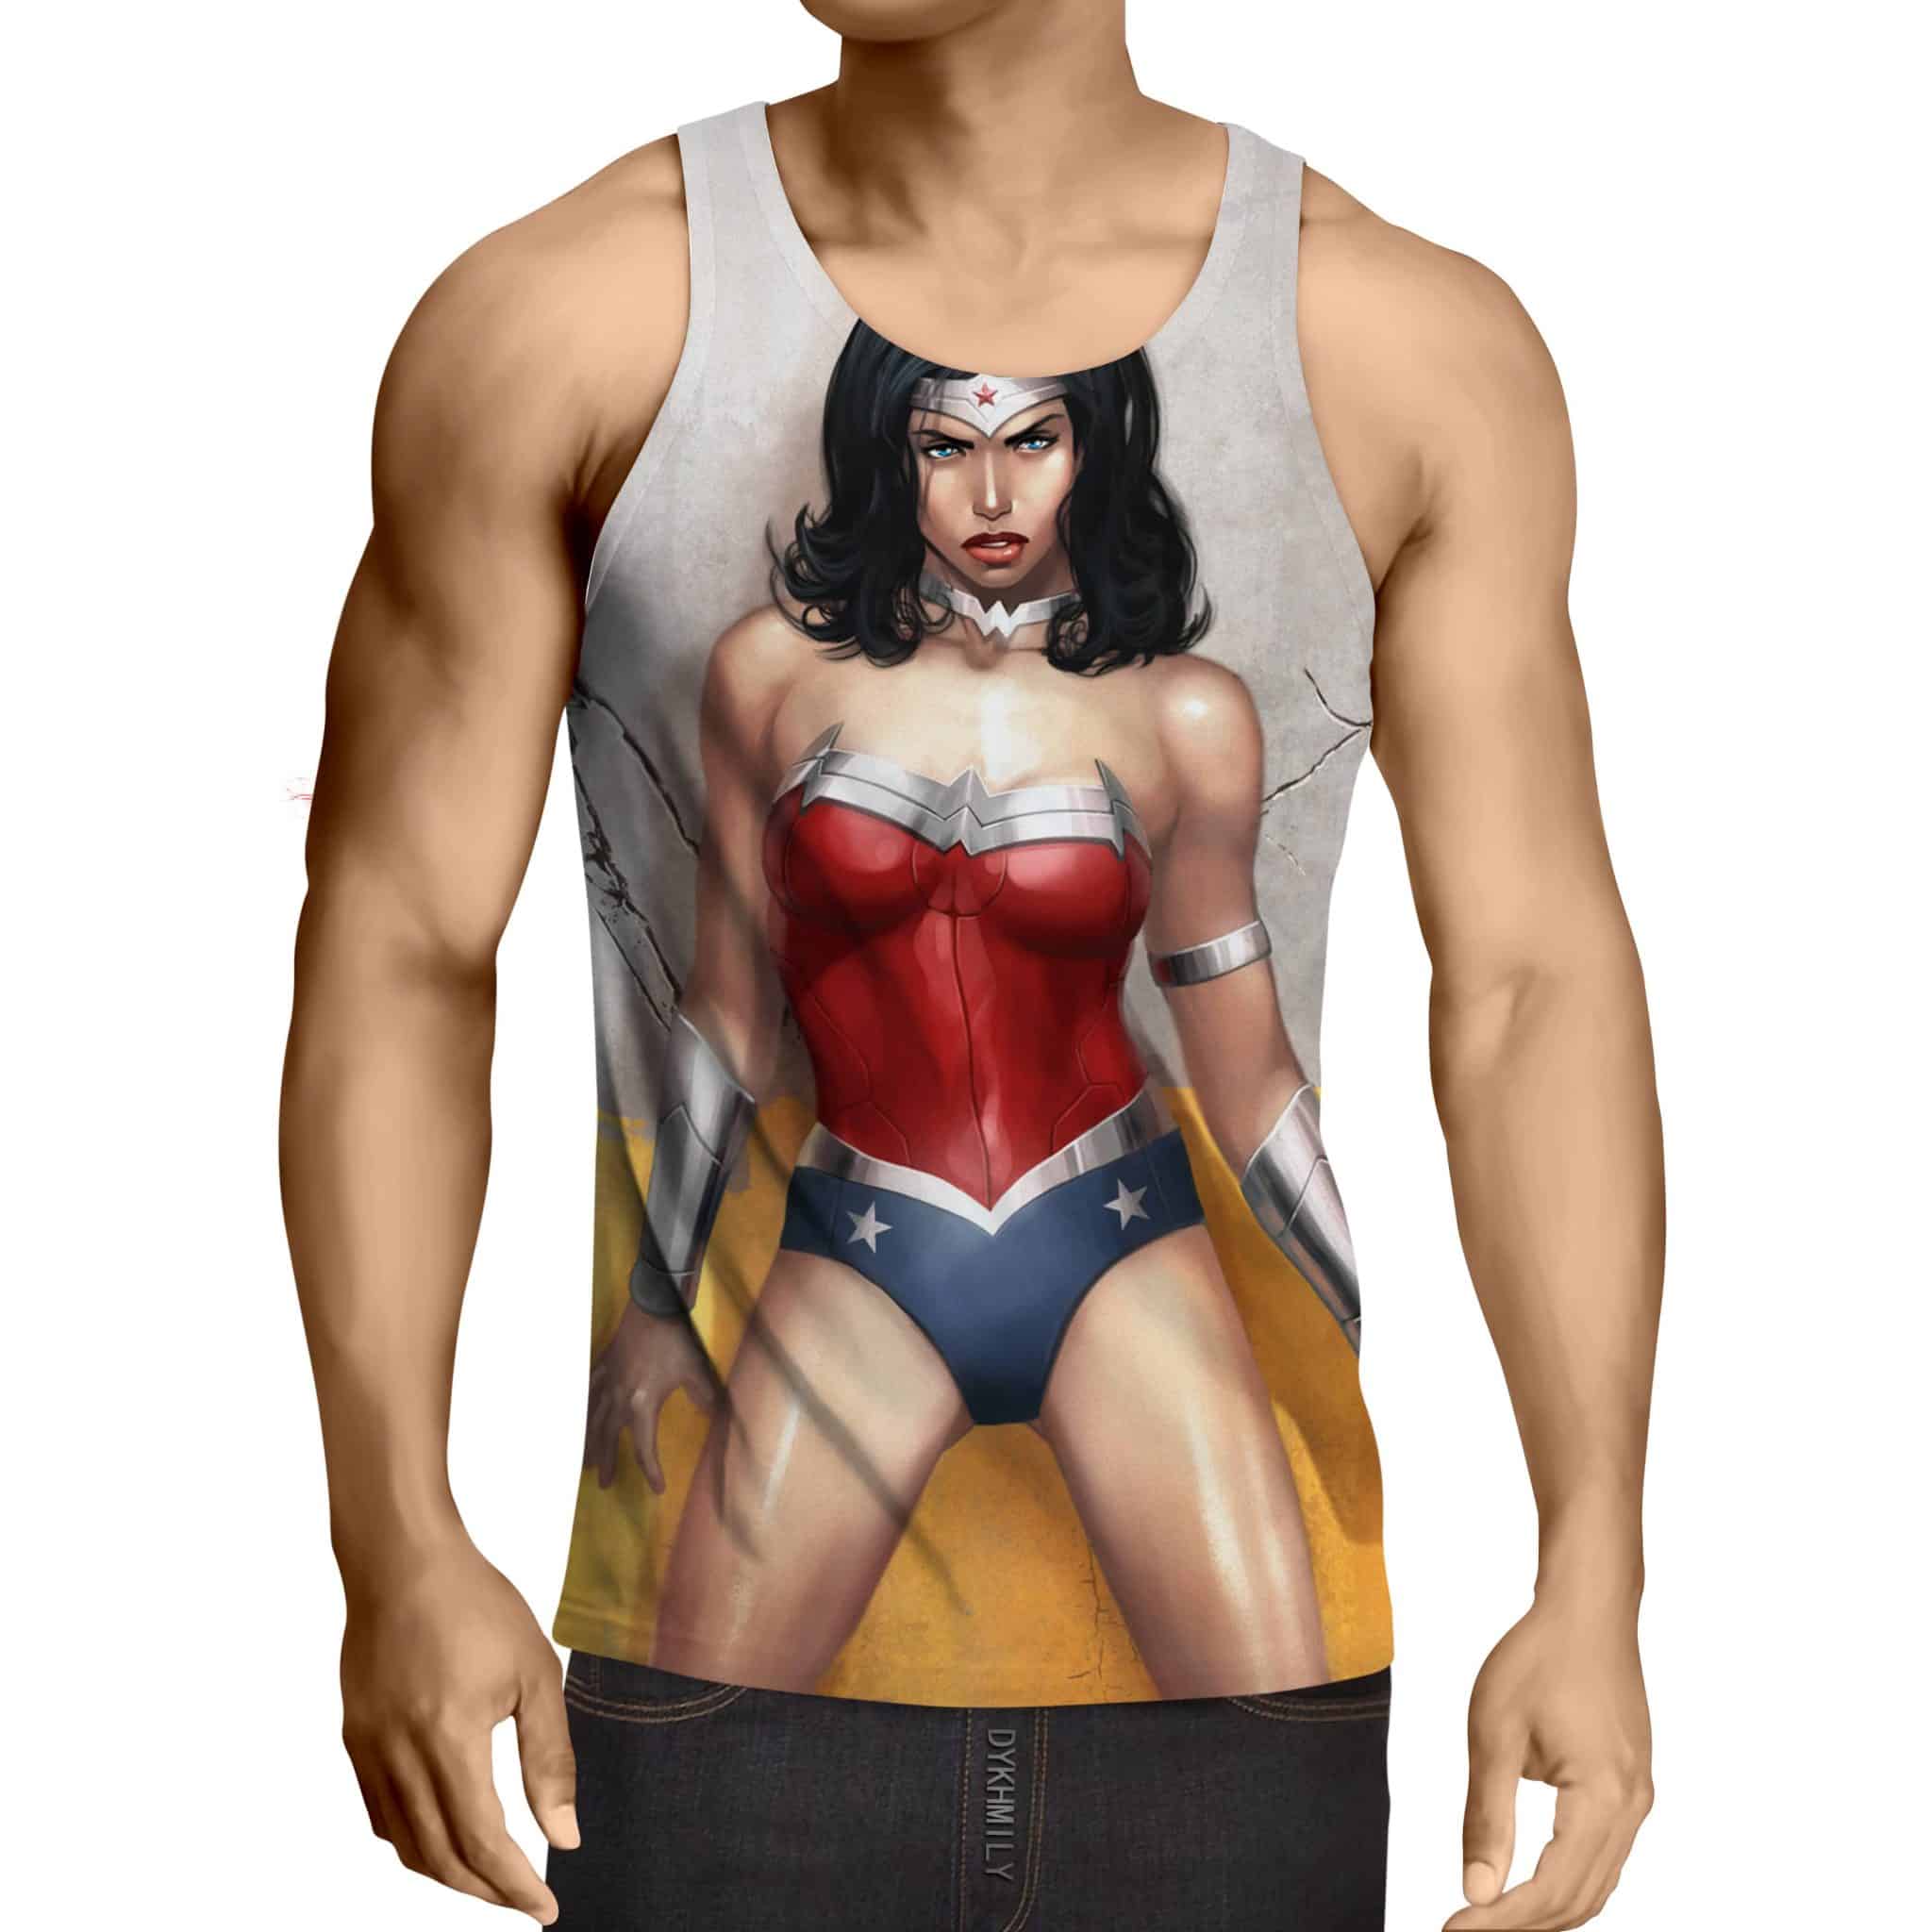 Sexy Wonder Woman 3D Animated Print Cracking Wall Tank Top